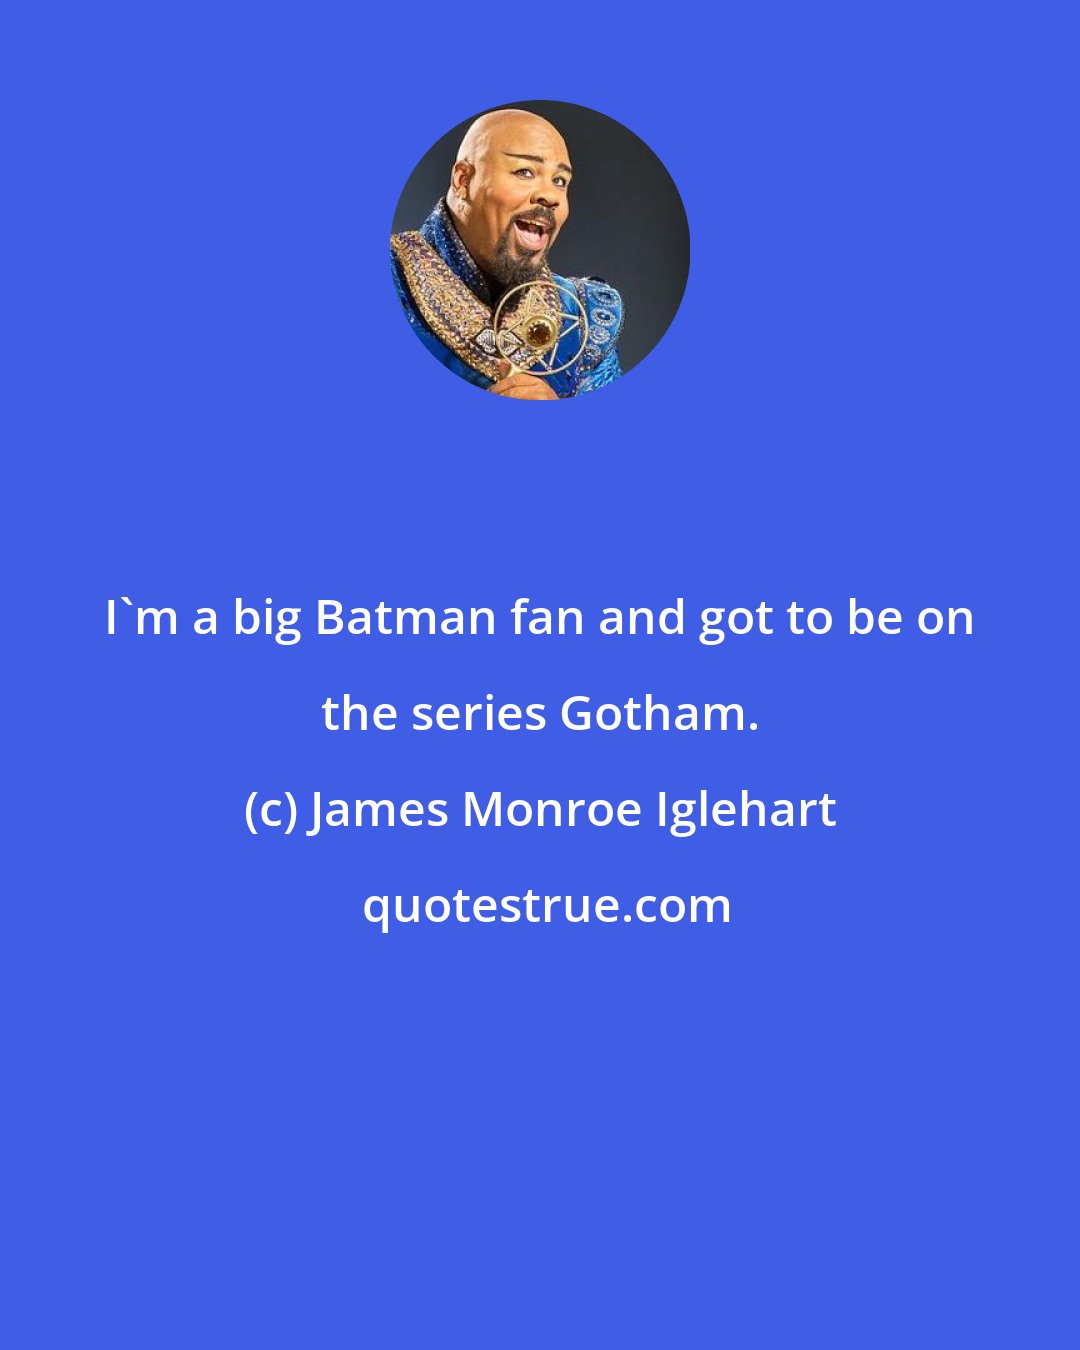 James Monroe Iglehart: I'm a big Batman fan and got to be on the series Gotham.